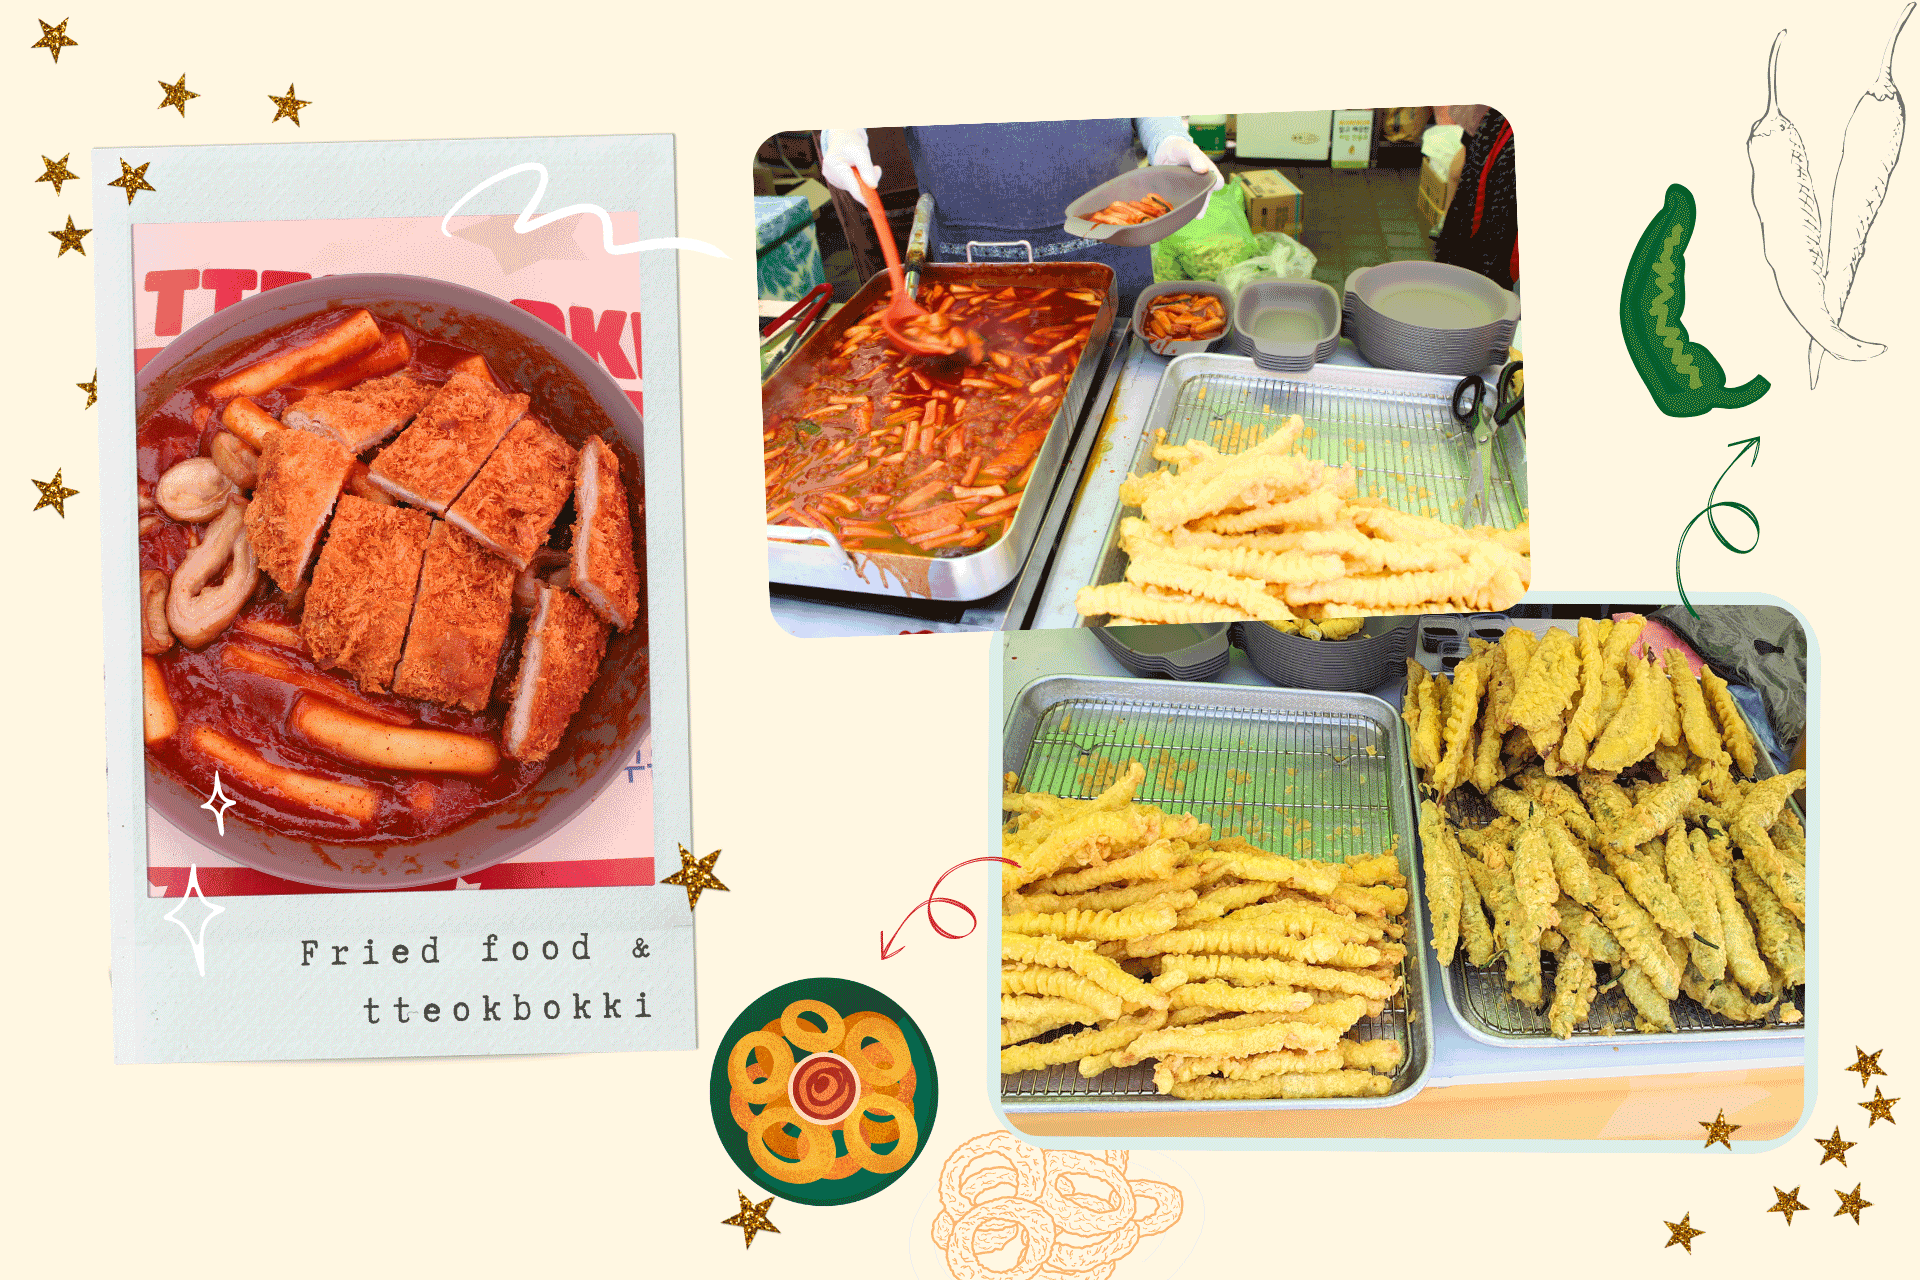 Tteokbokki and fried foods